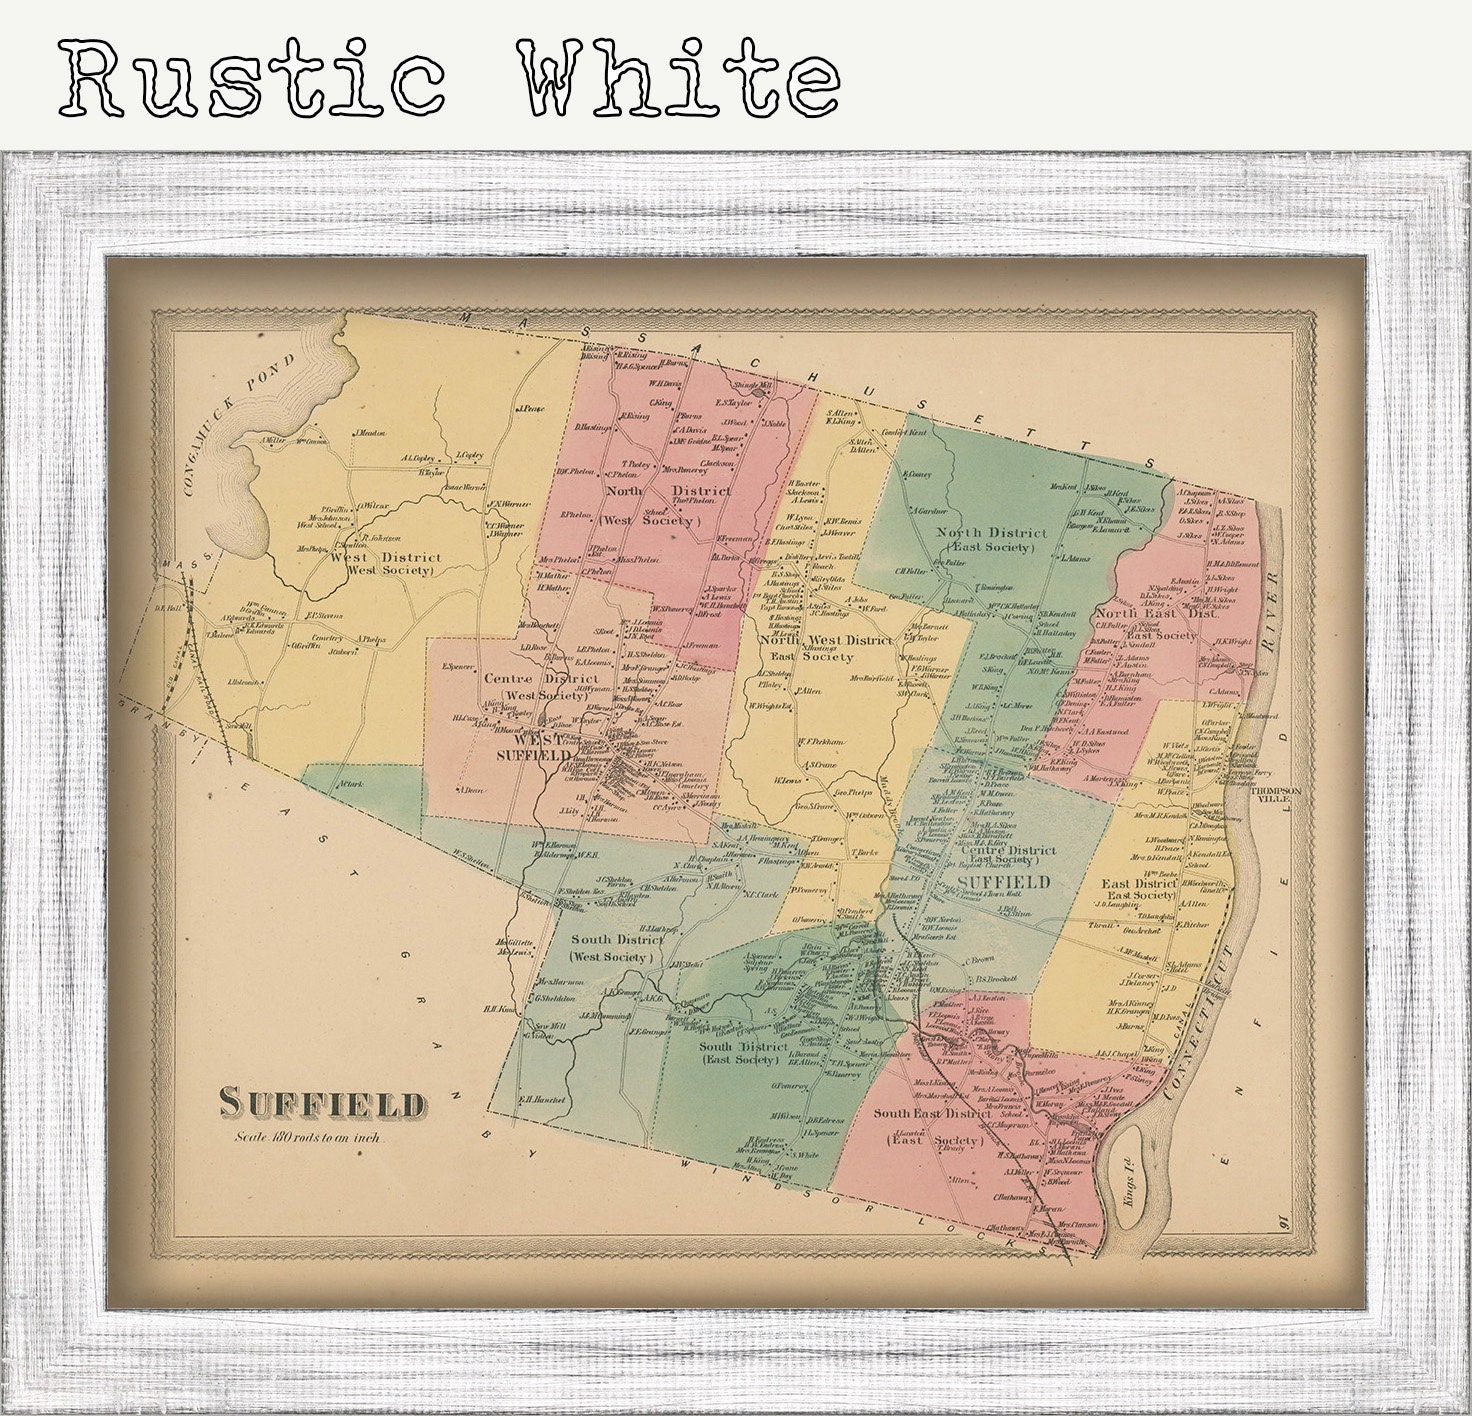 suffield-connecticut-1869-map-replica-or-genuine-original